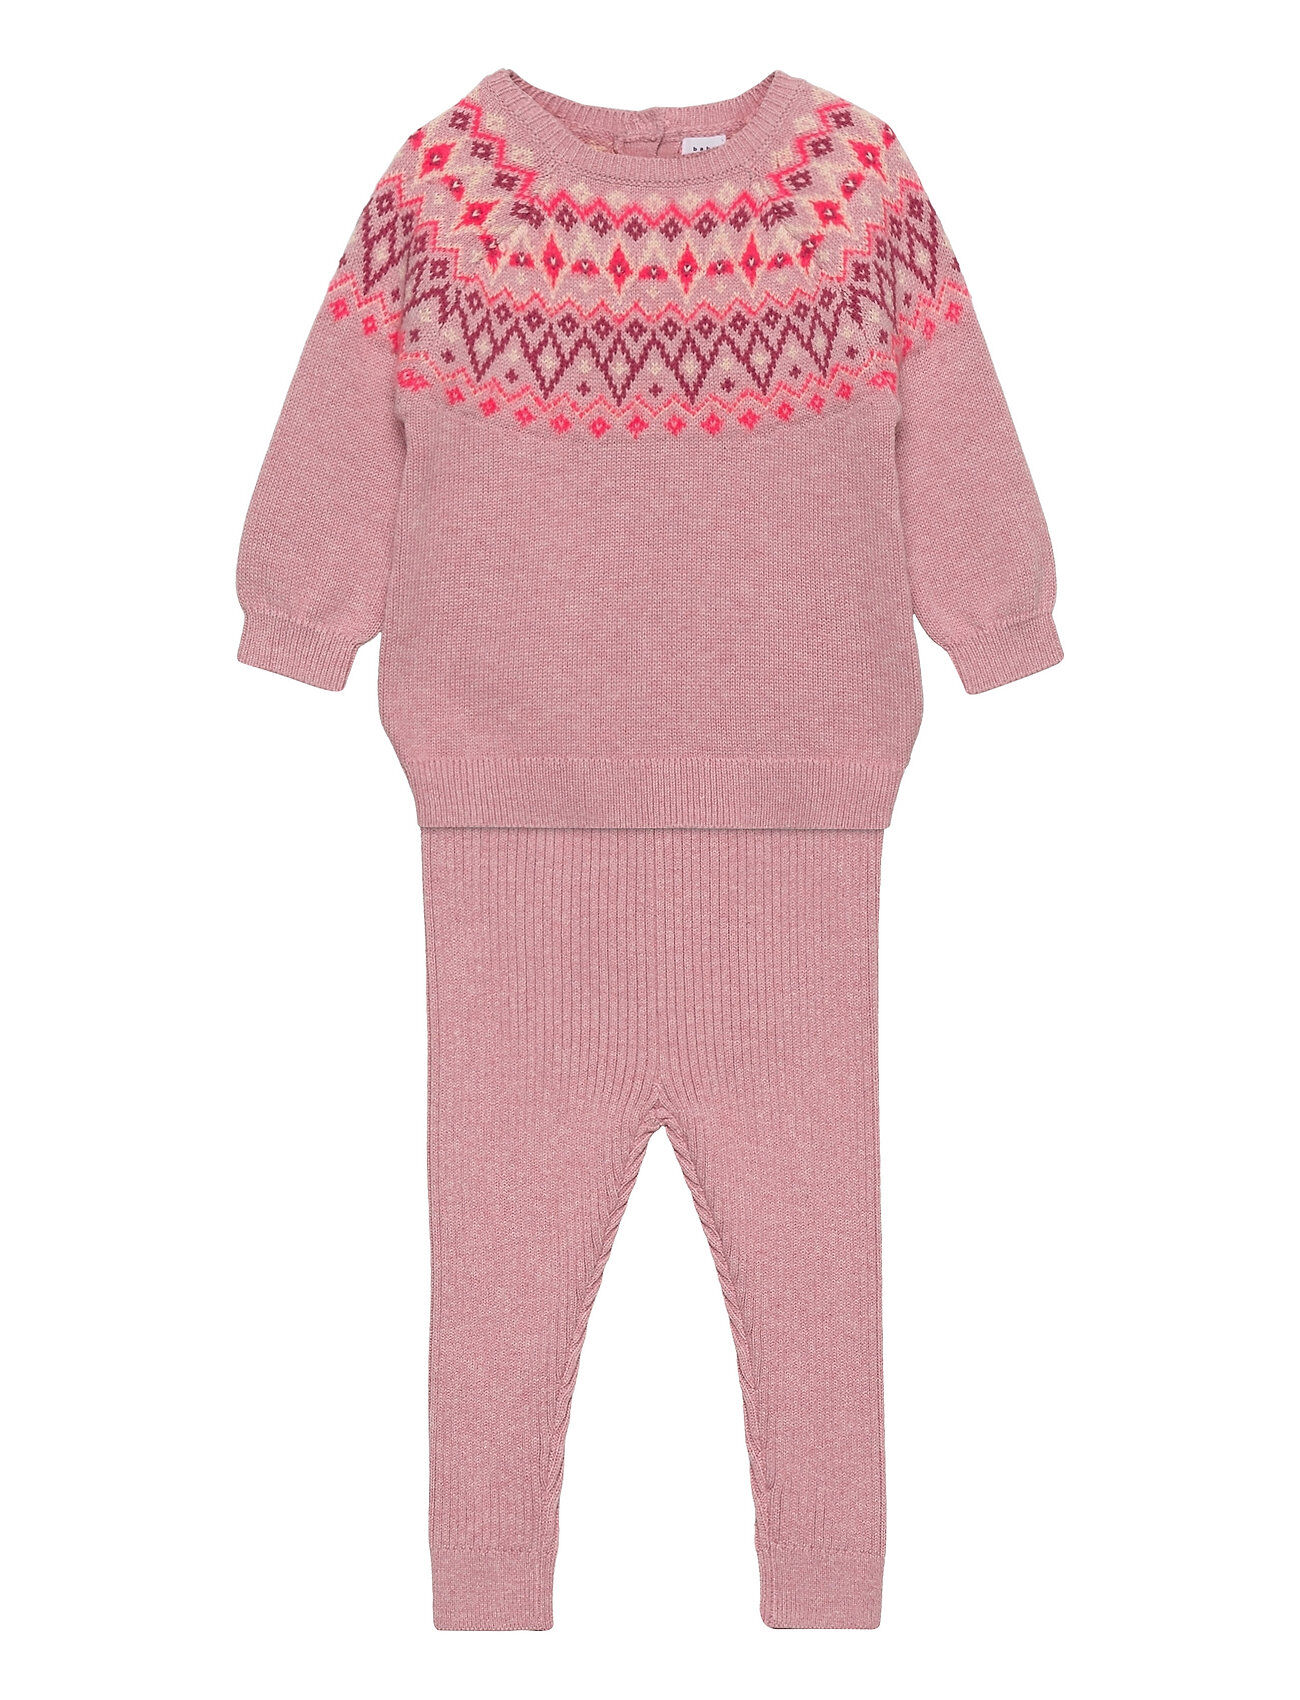 GAP Baby Print Sweater Dress Outfit Set 2-piece Sets Rosa GAP